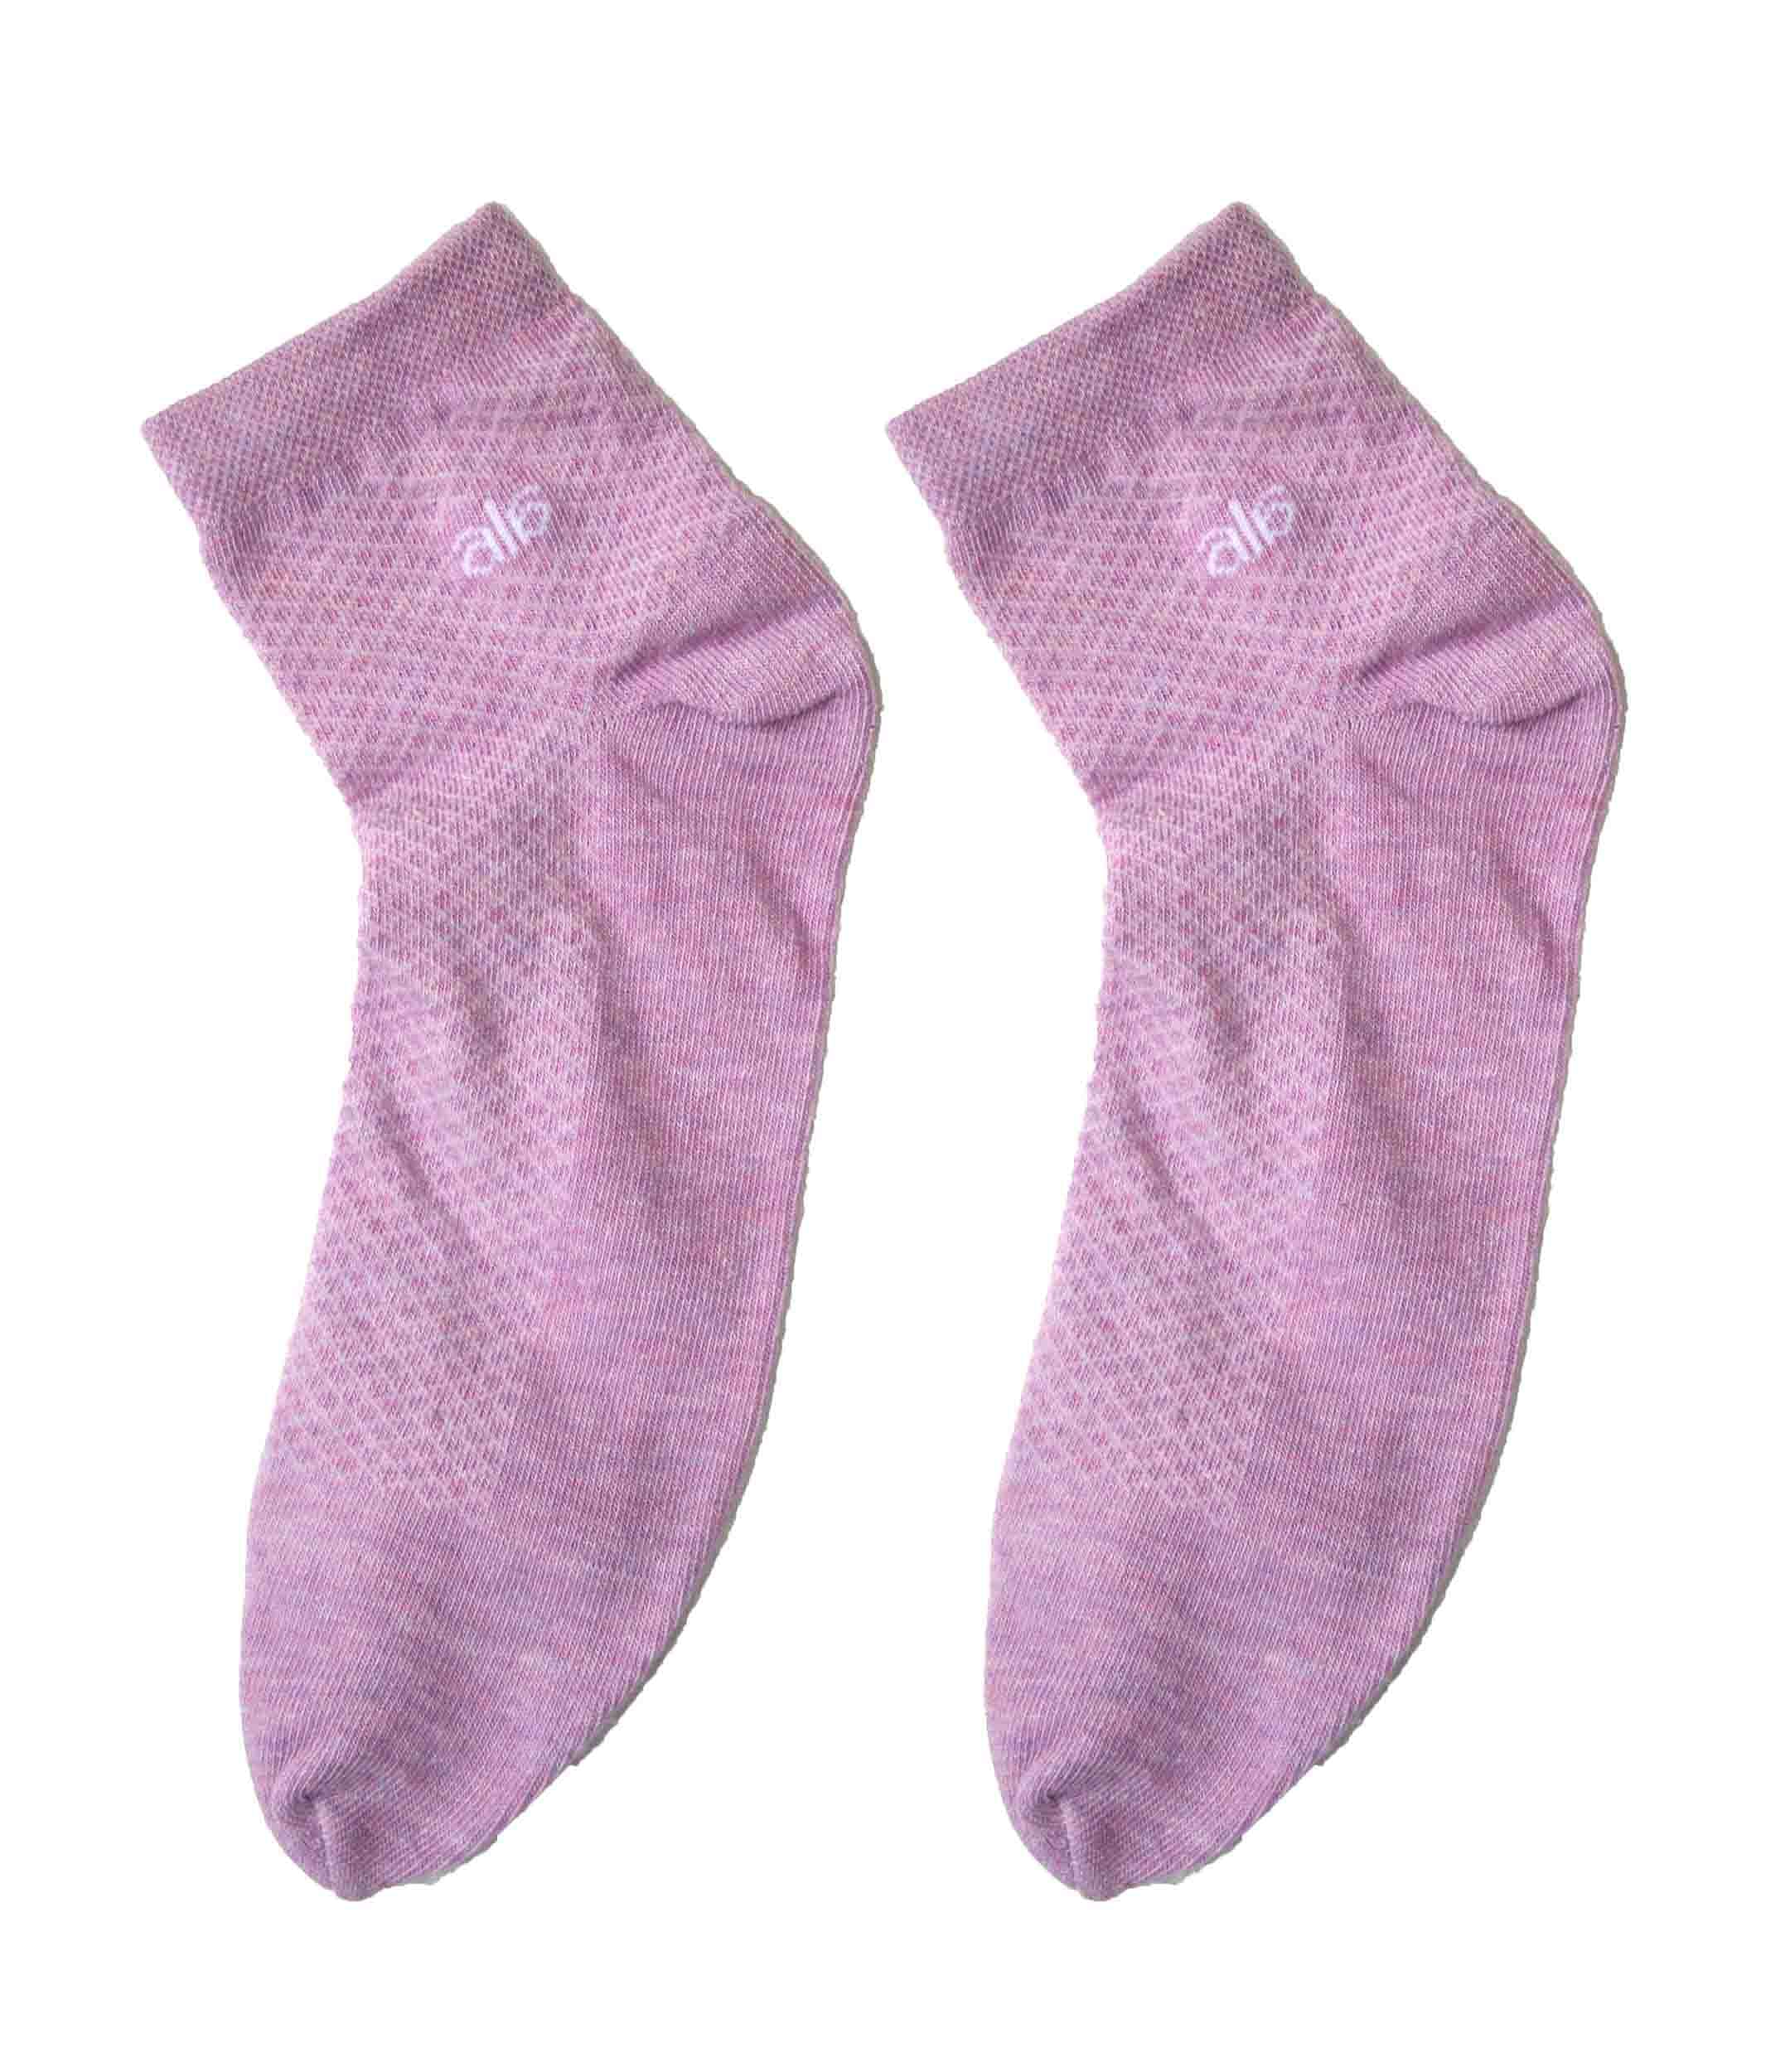 Ellie Wmn ankle Socks - Design-BG-Wmn-DESIGN-004-PPL